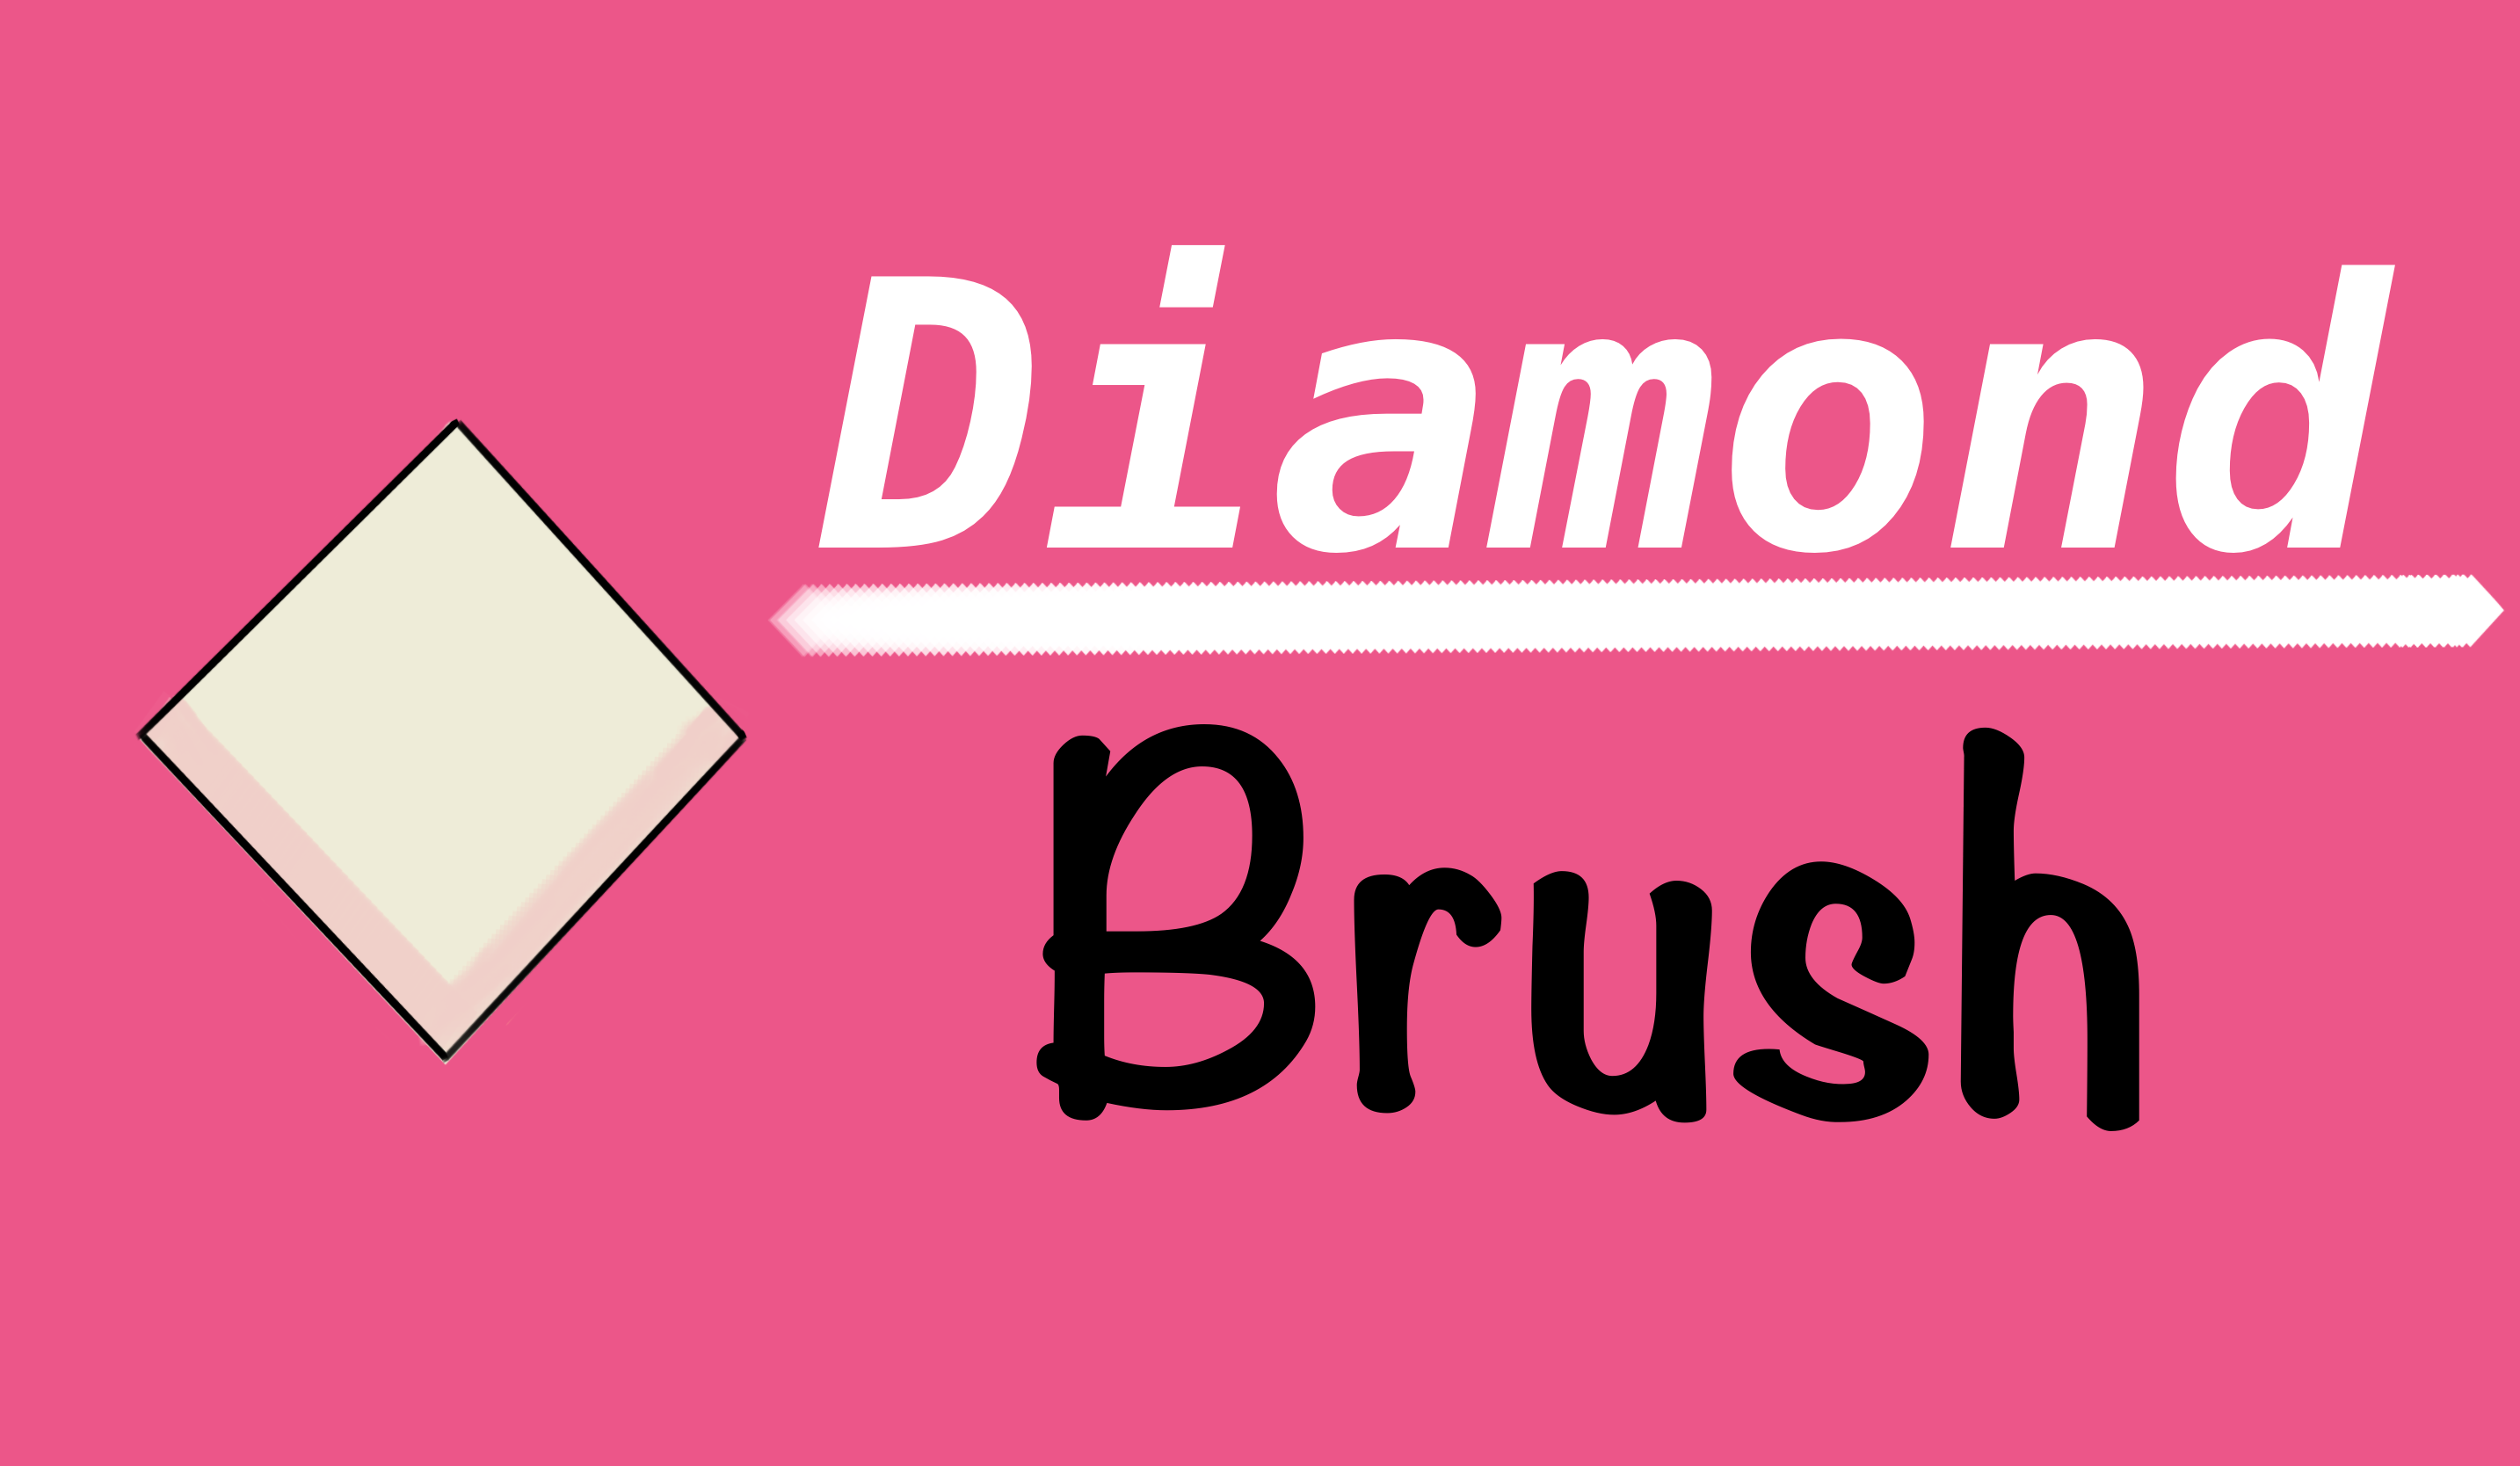 procreate diamond brush free